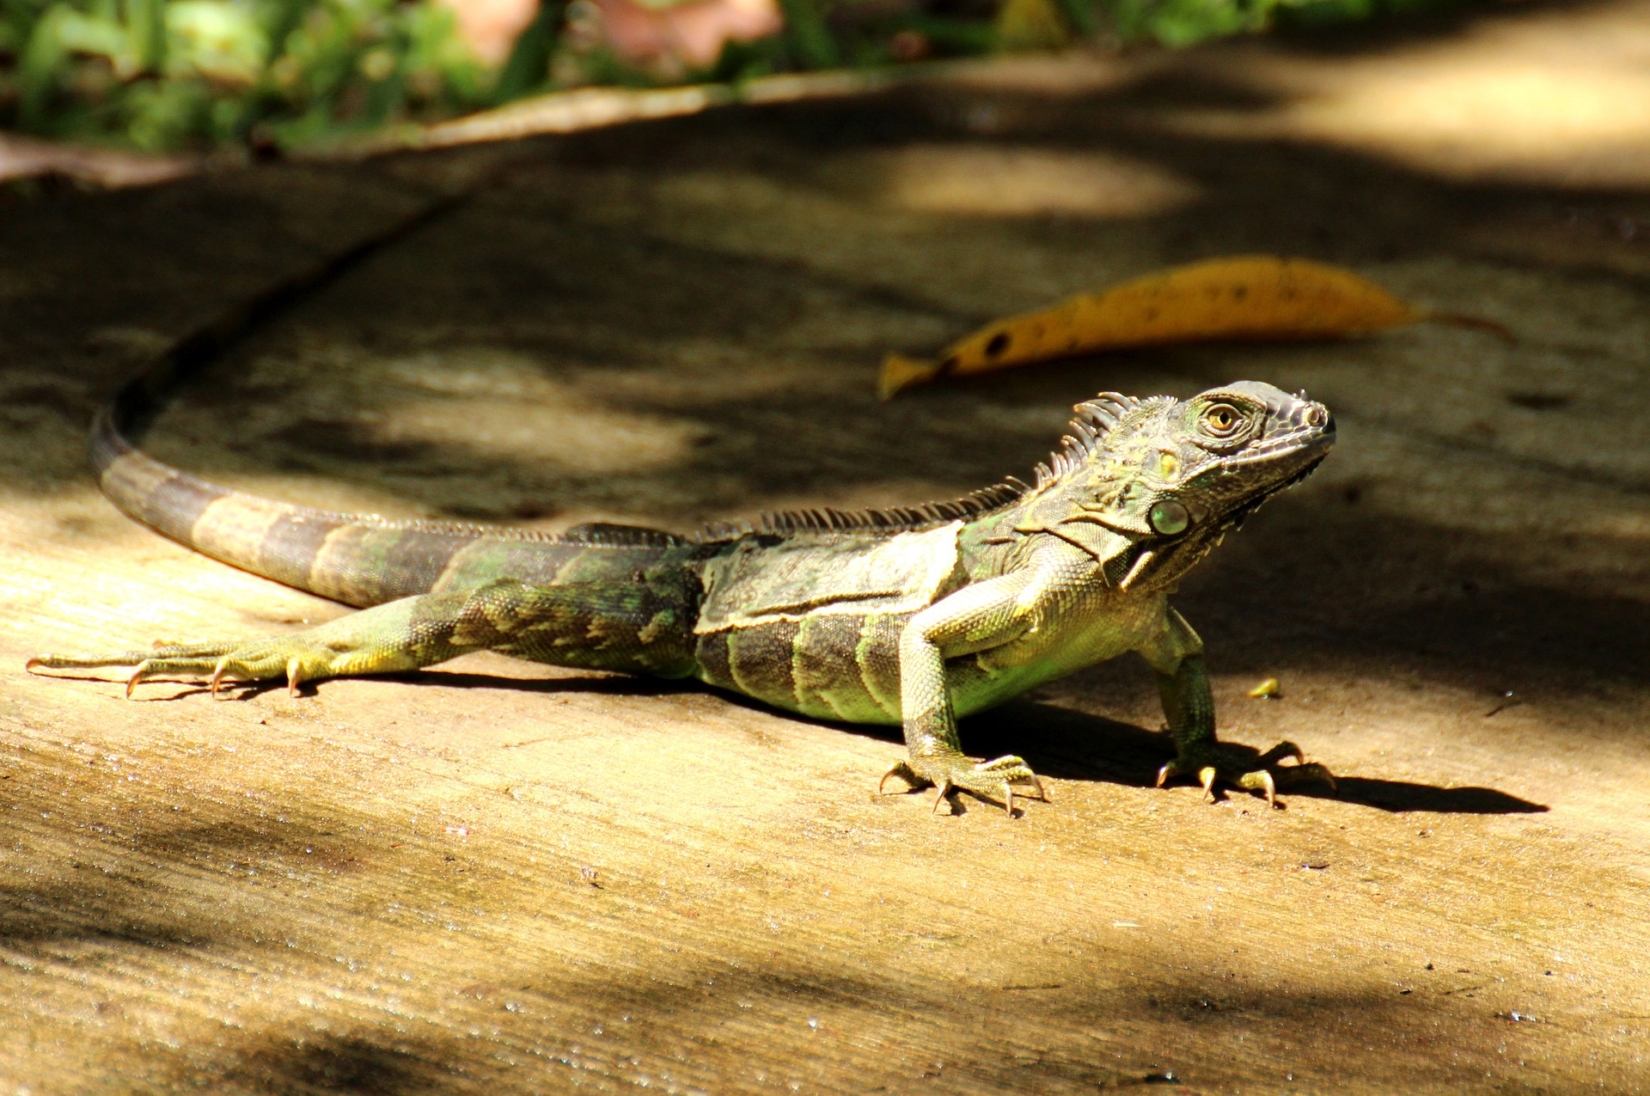 Scaly iguana basking in the sunlight in Costa Rica